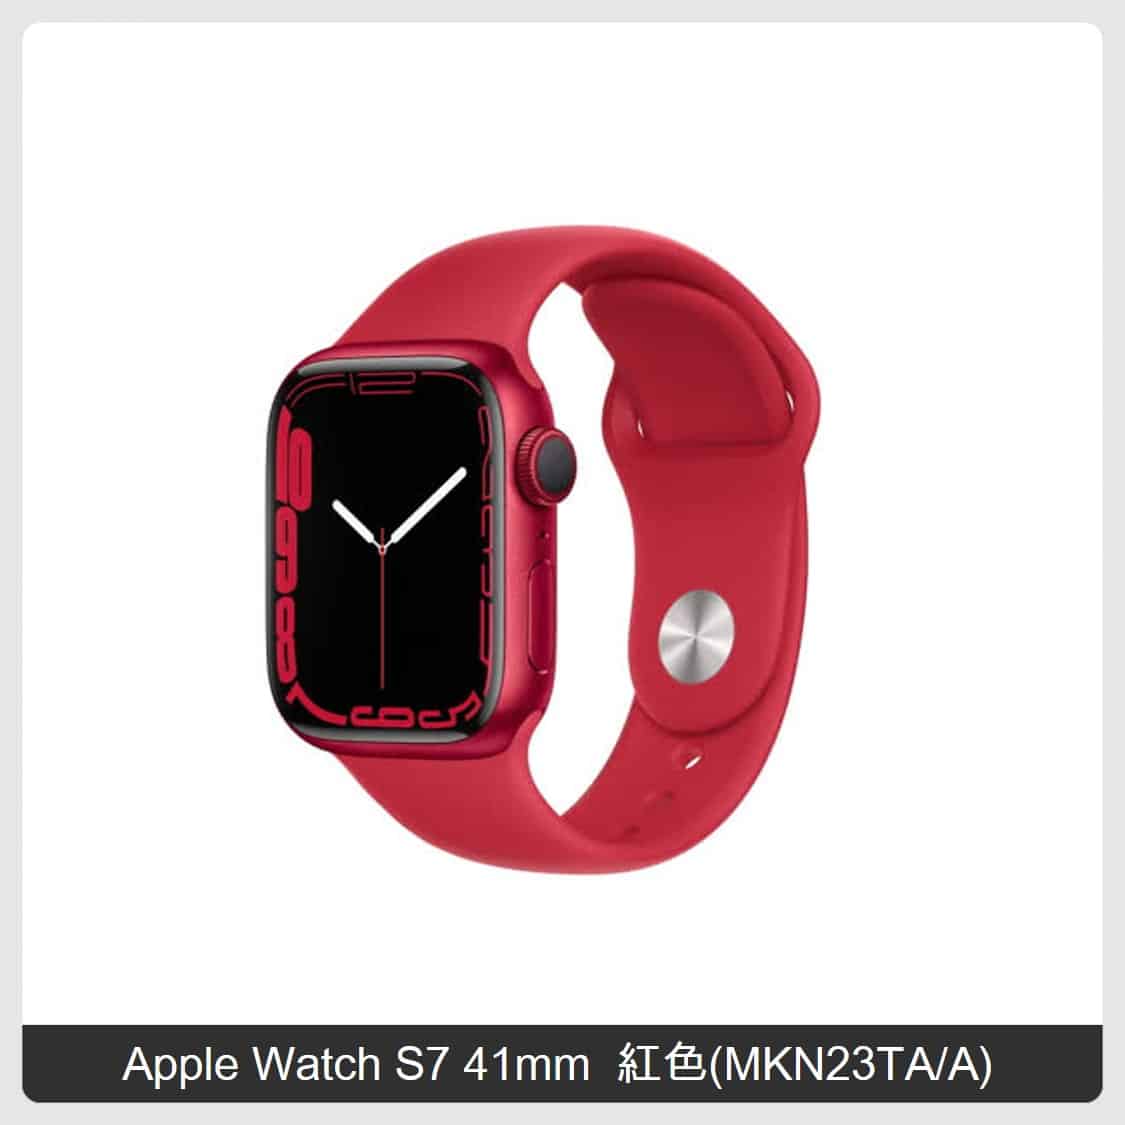 Apple Watch S7 41mm 紅色(MKN23TA/A) | 法雅客網路商店